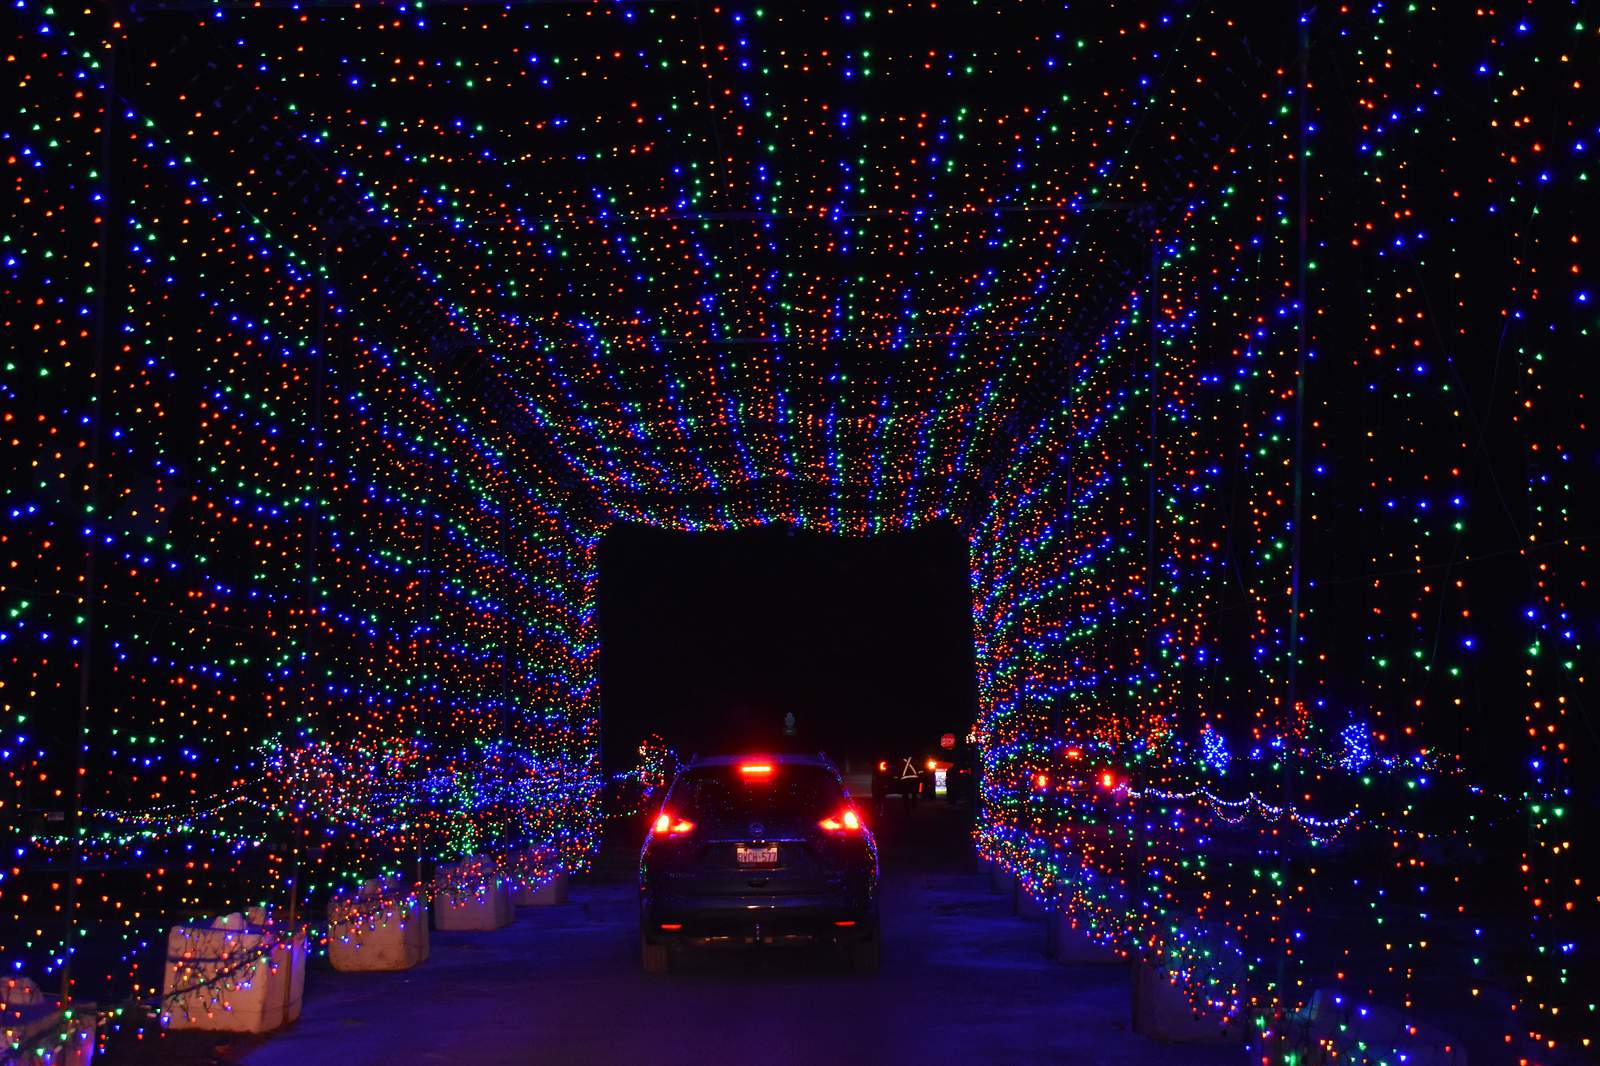 'Magical’ drive-thru holiday light show coming to Southeast Michigan